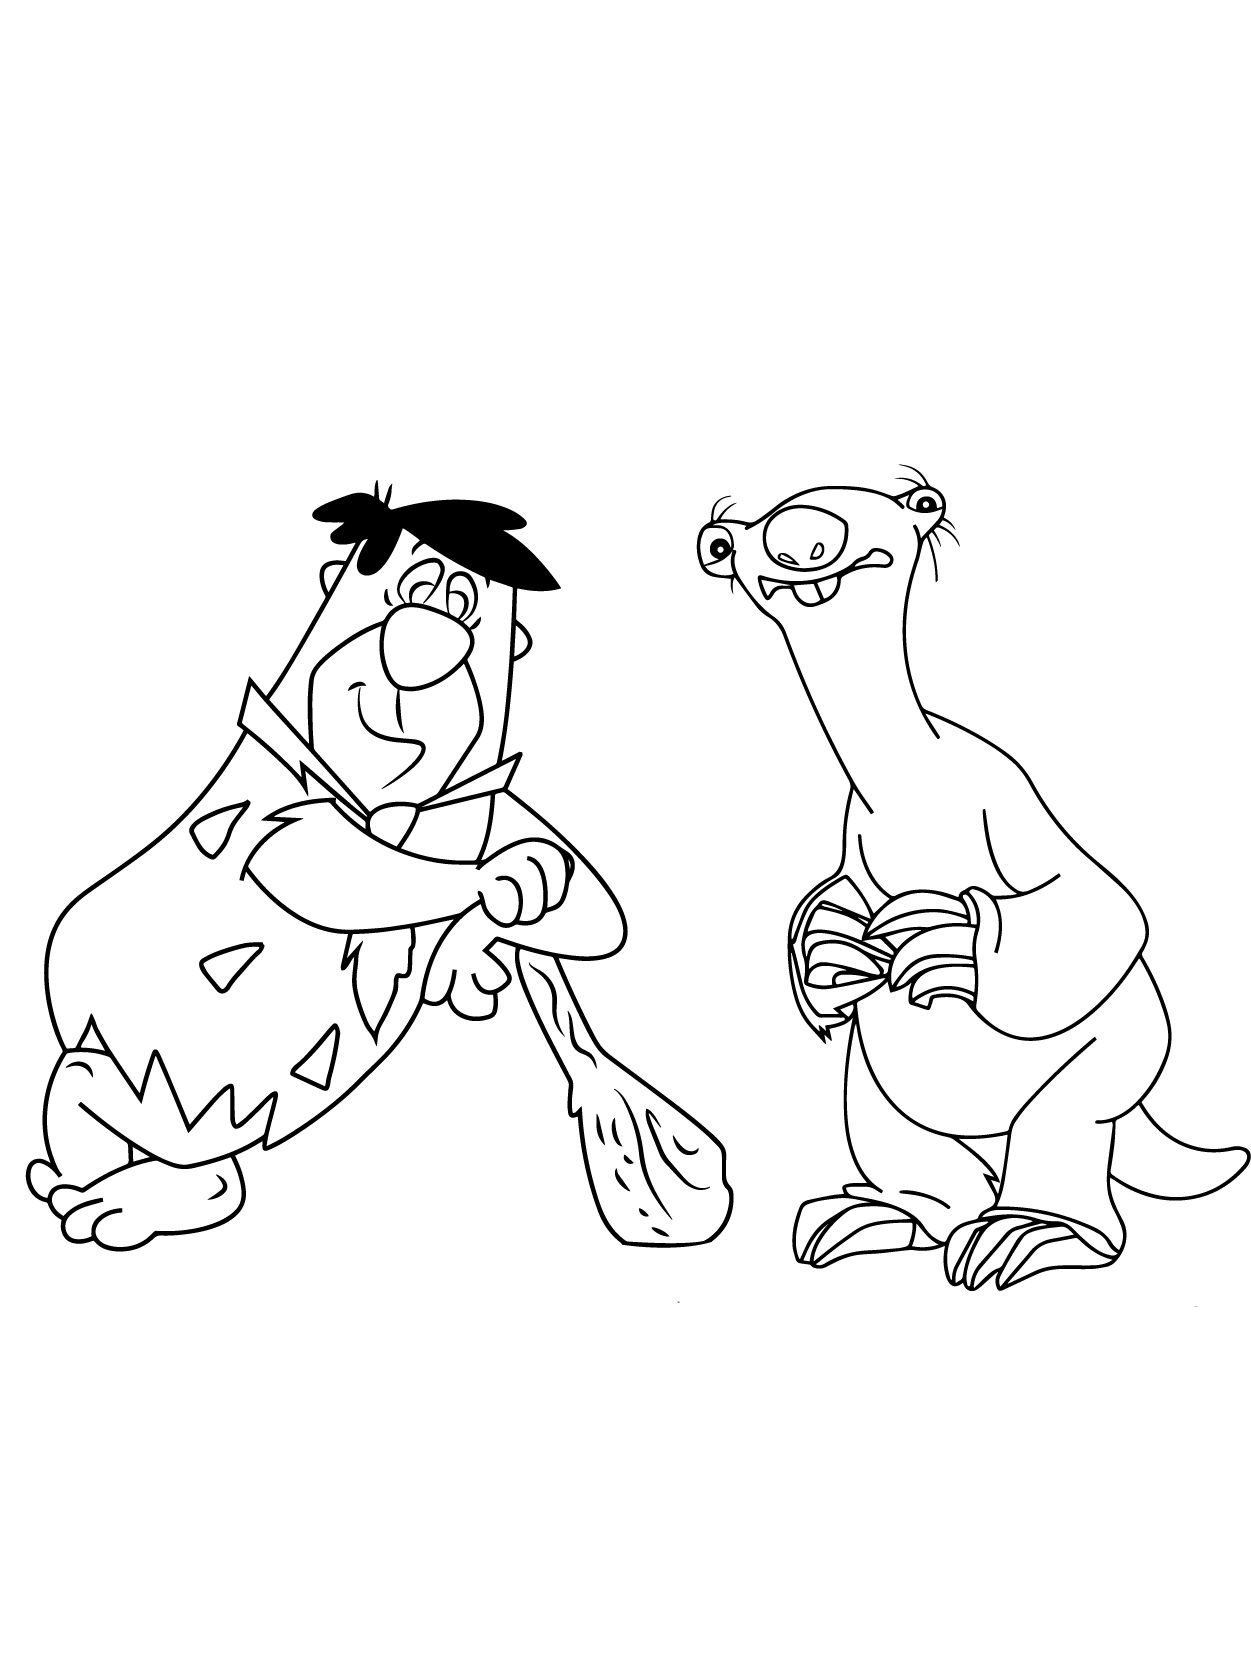 Flintstone and Sid